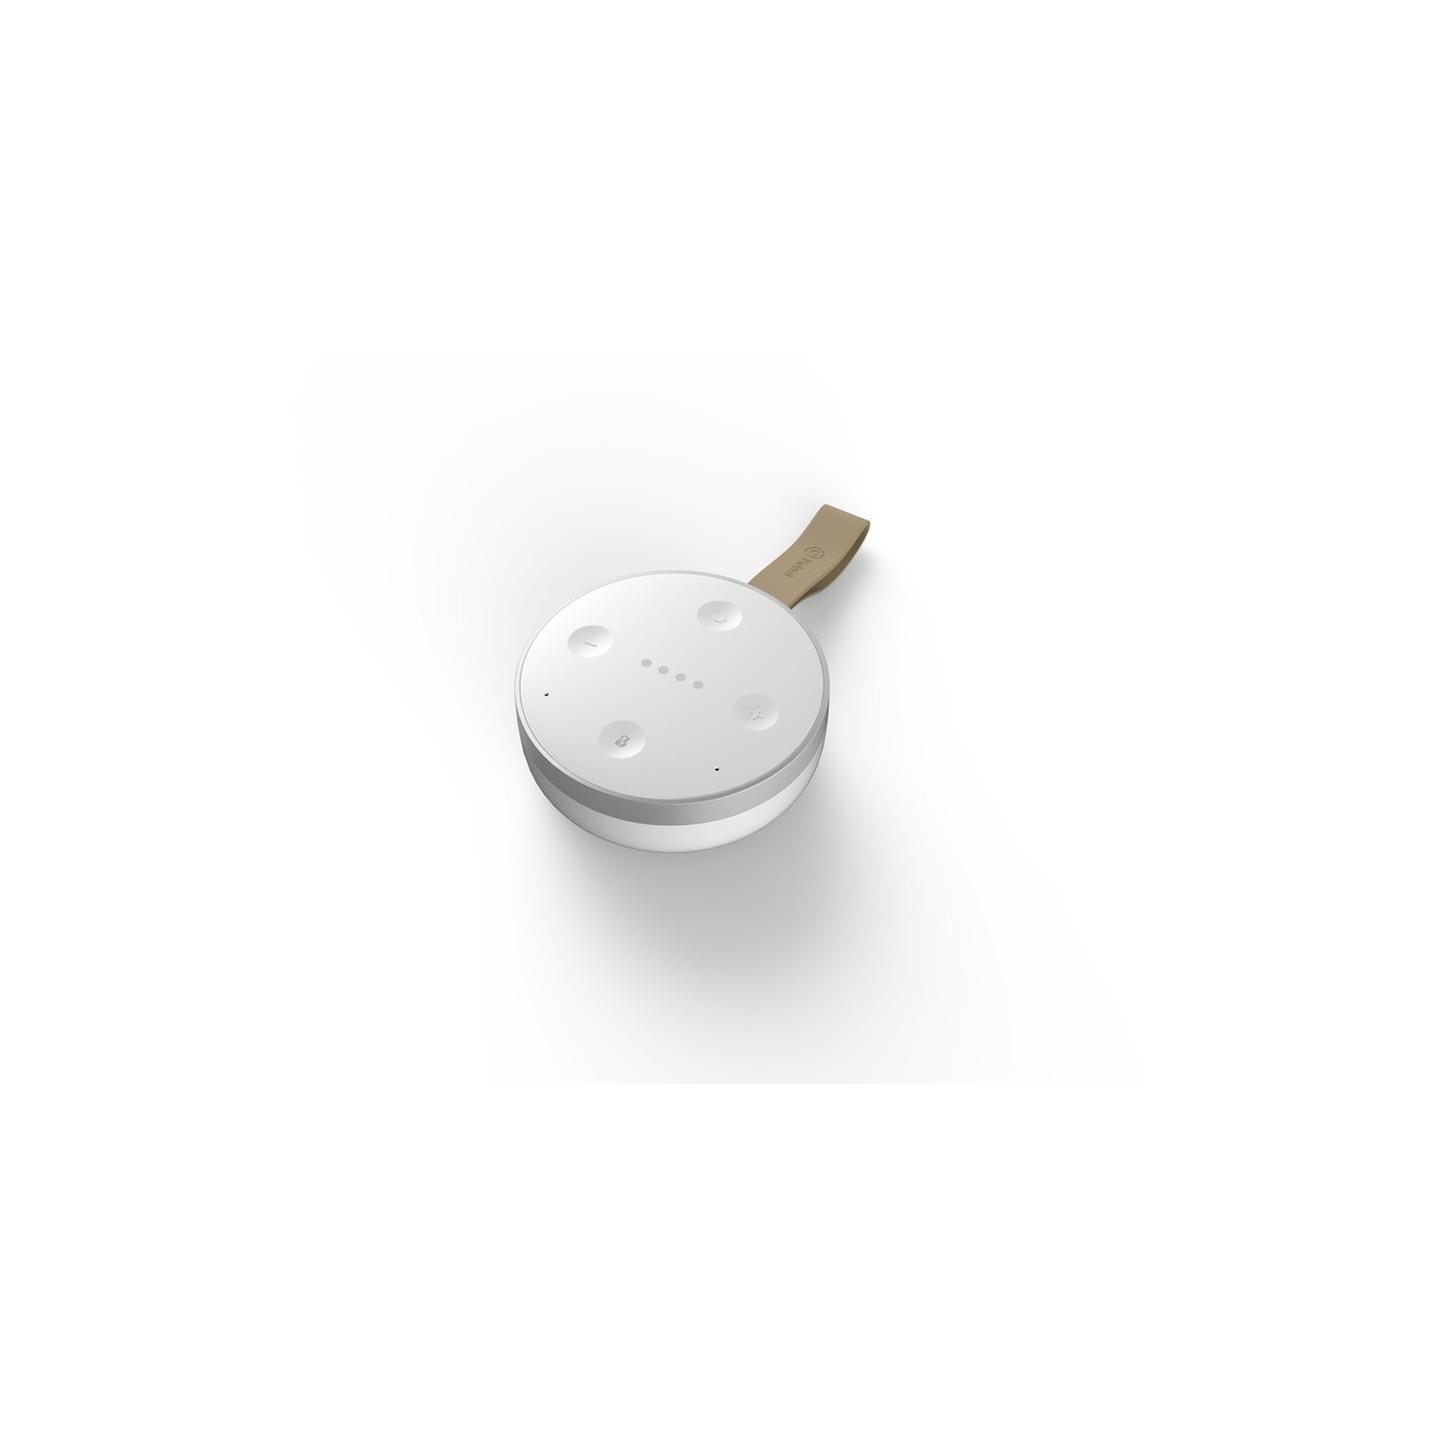 TicHome Mini Smart Speaker White with Google Assistant